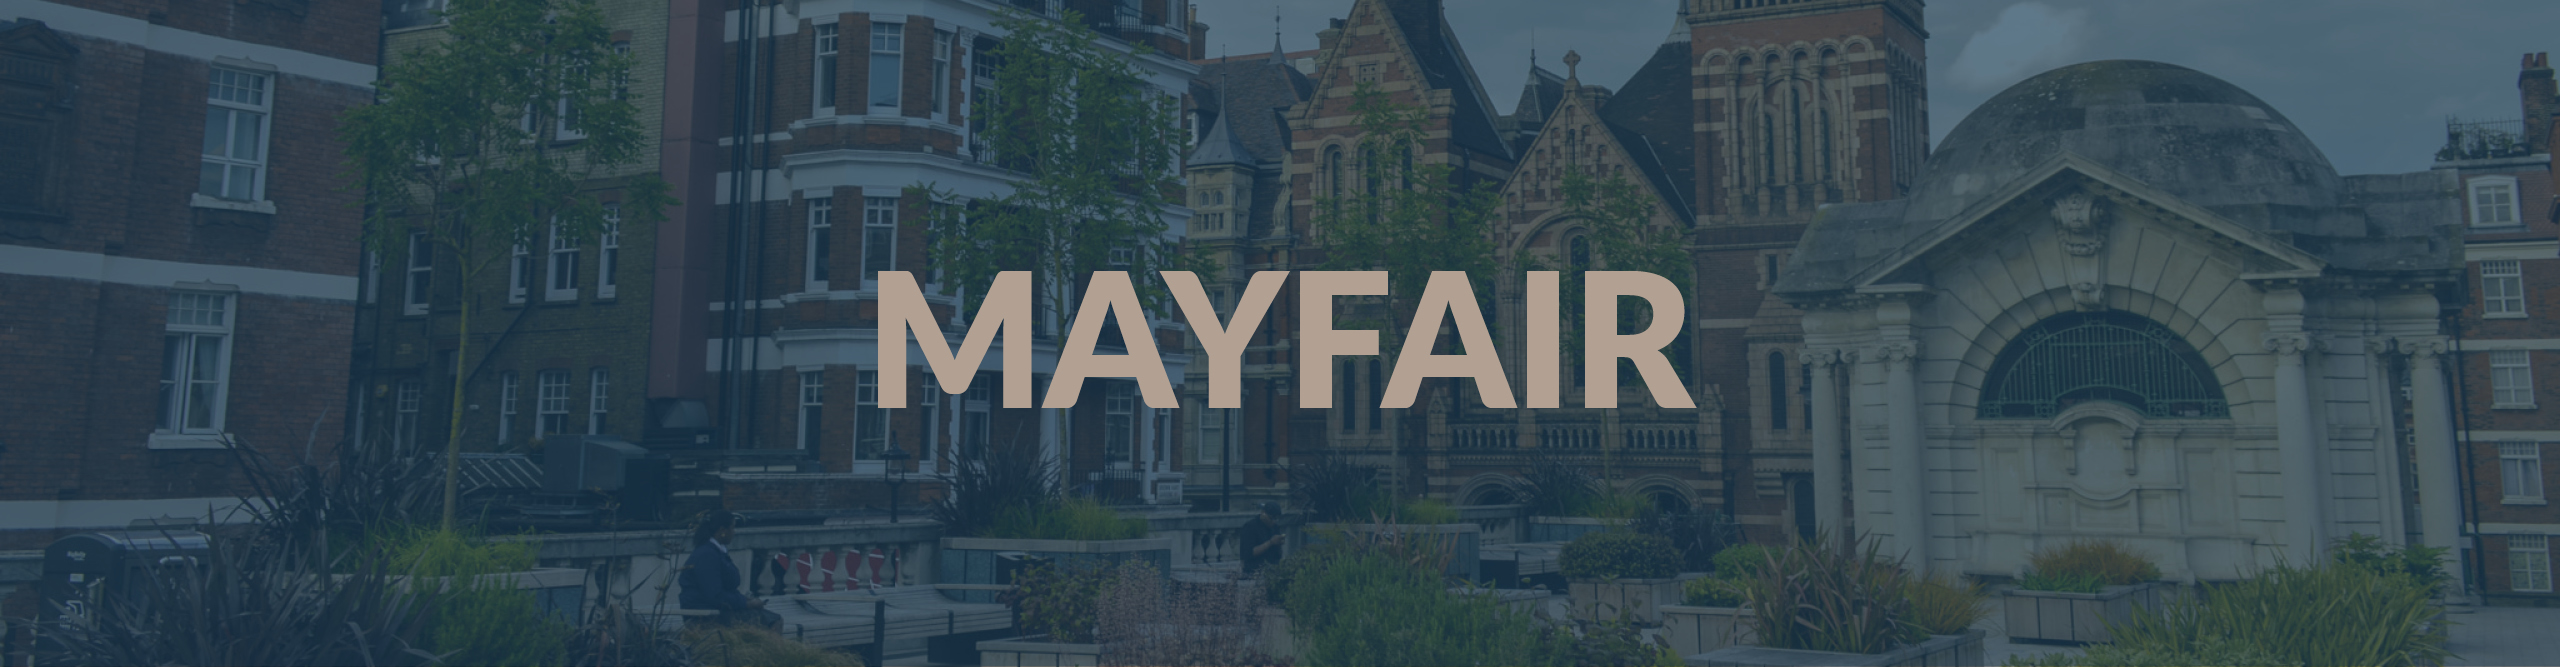 Mayfair’s Best Brand, Website & Marketing Agency